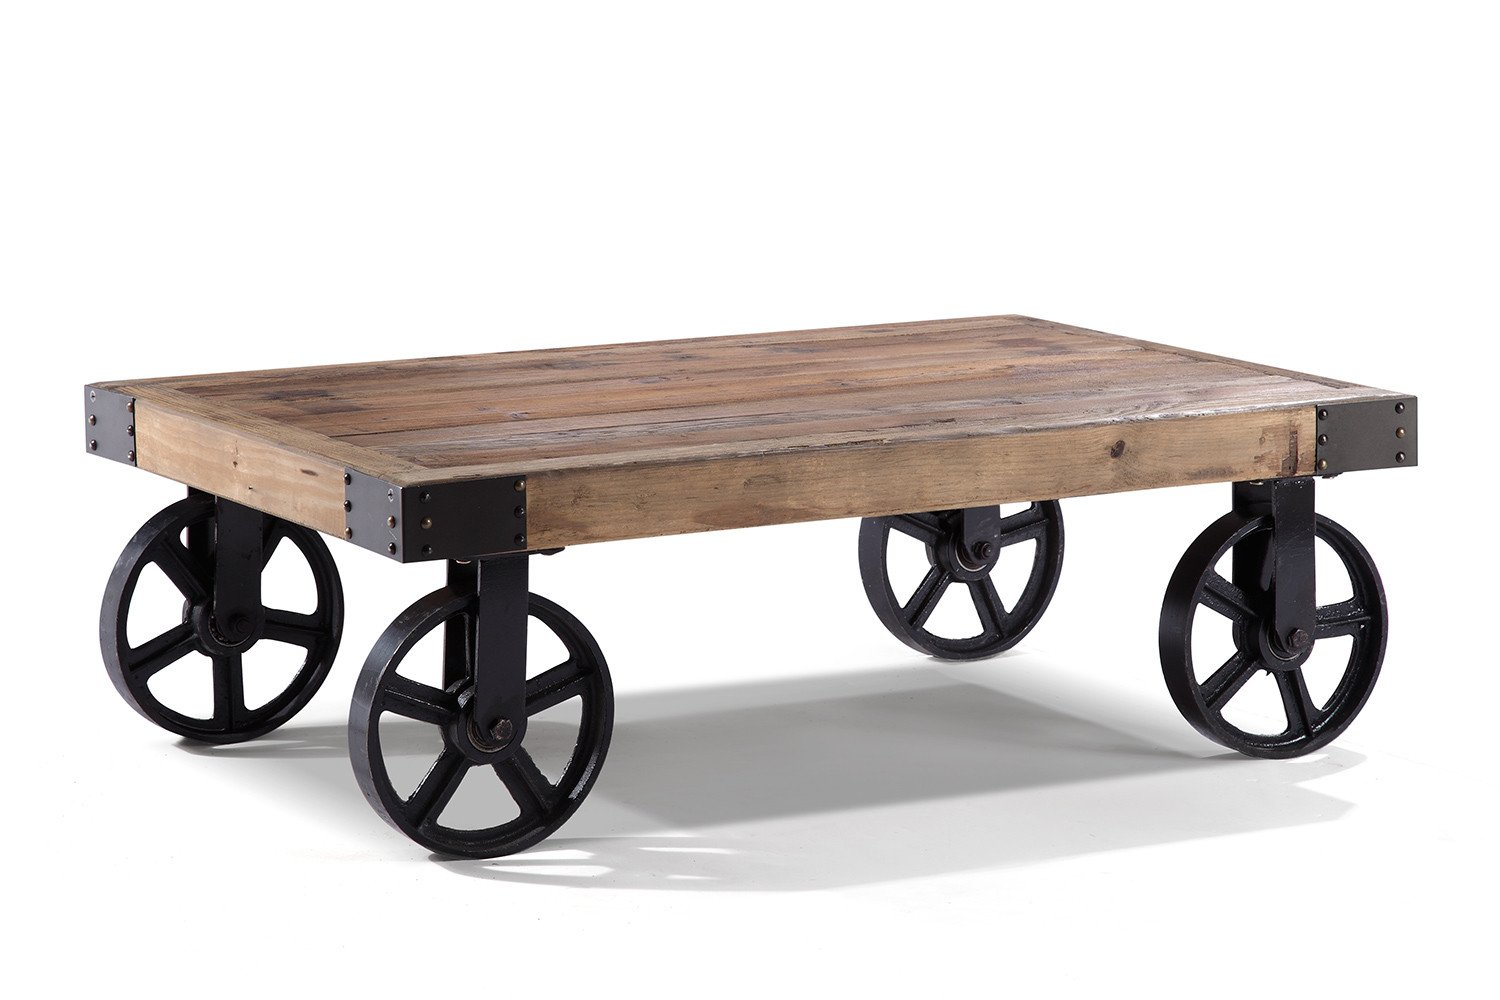 Table basse bois metal roue